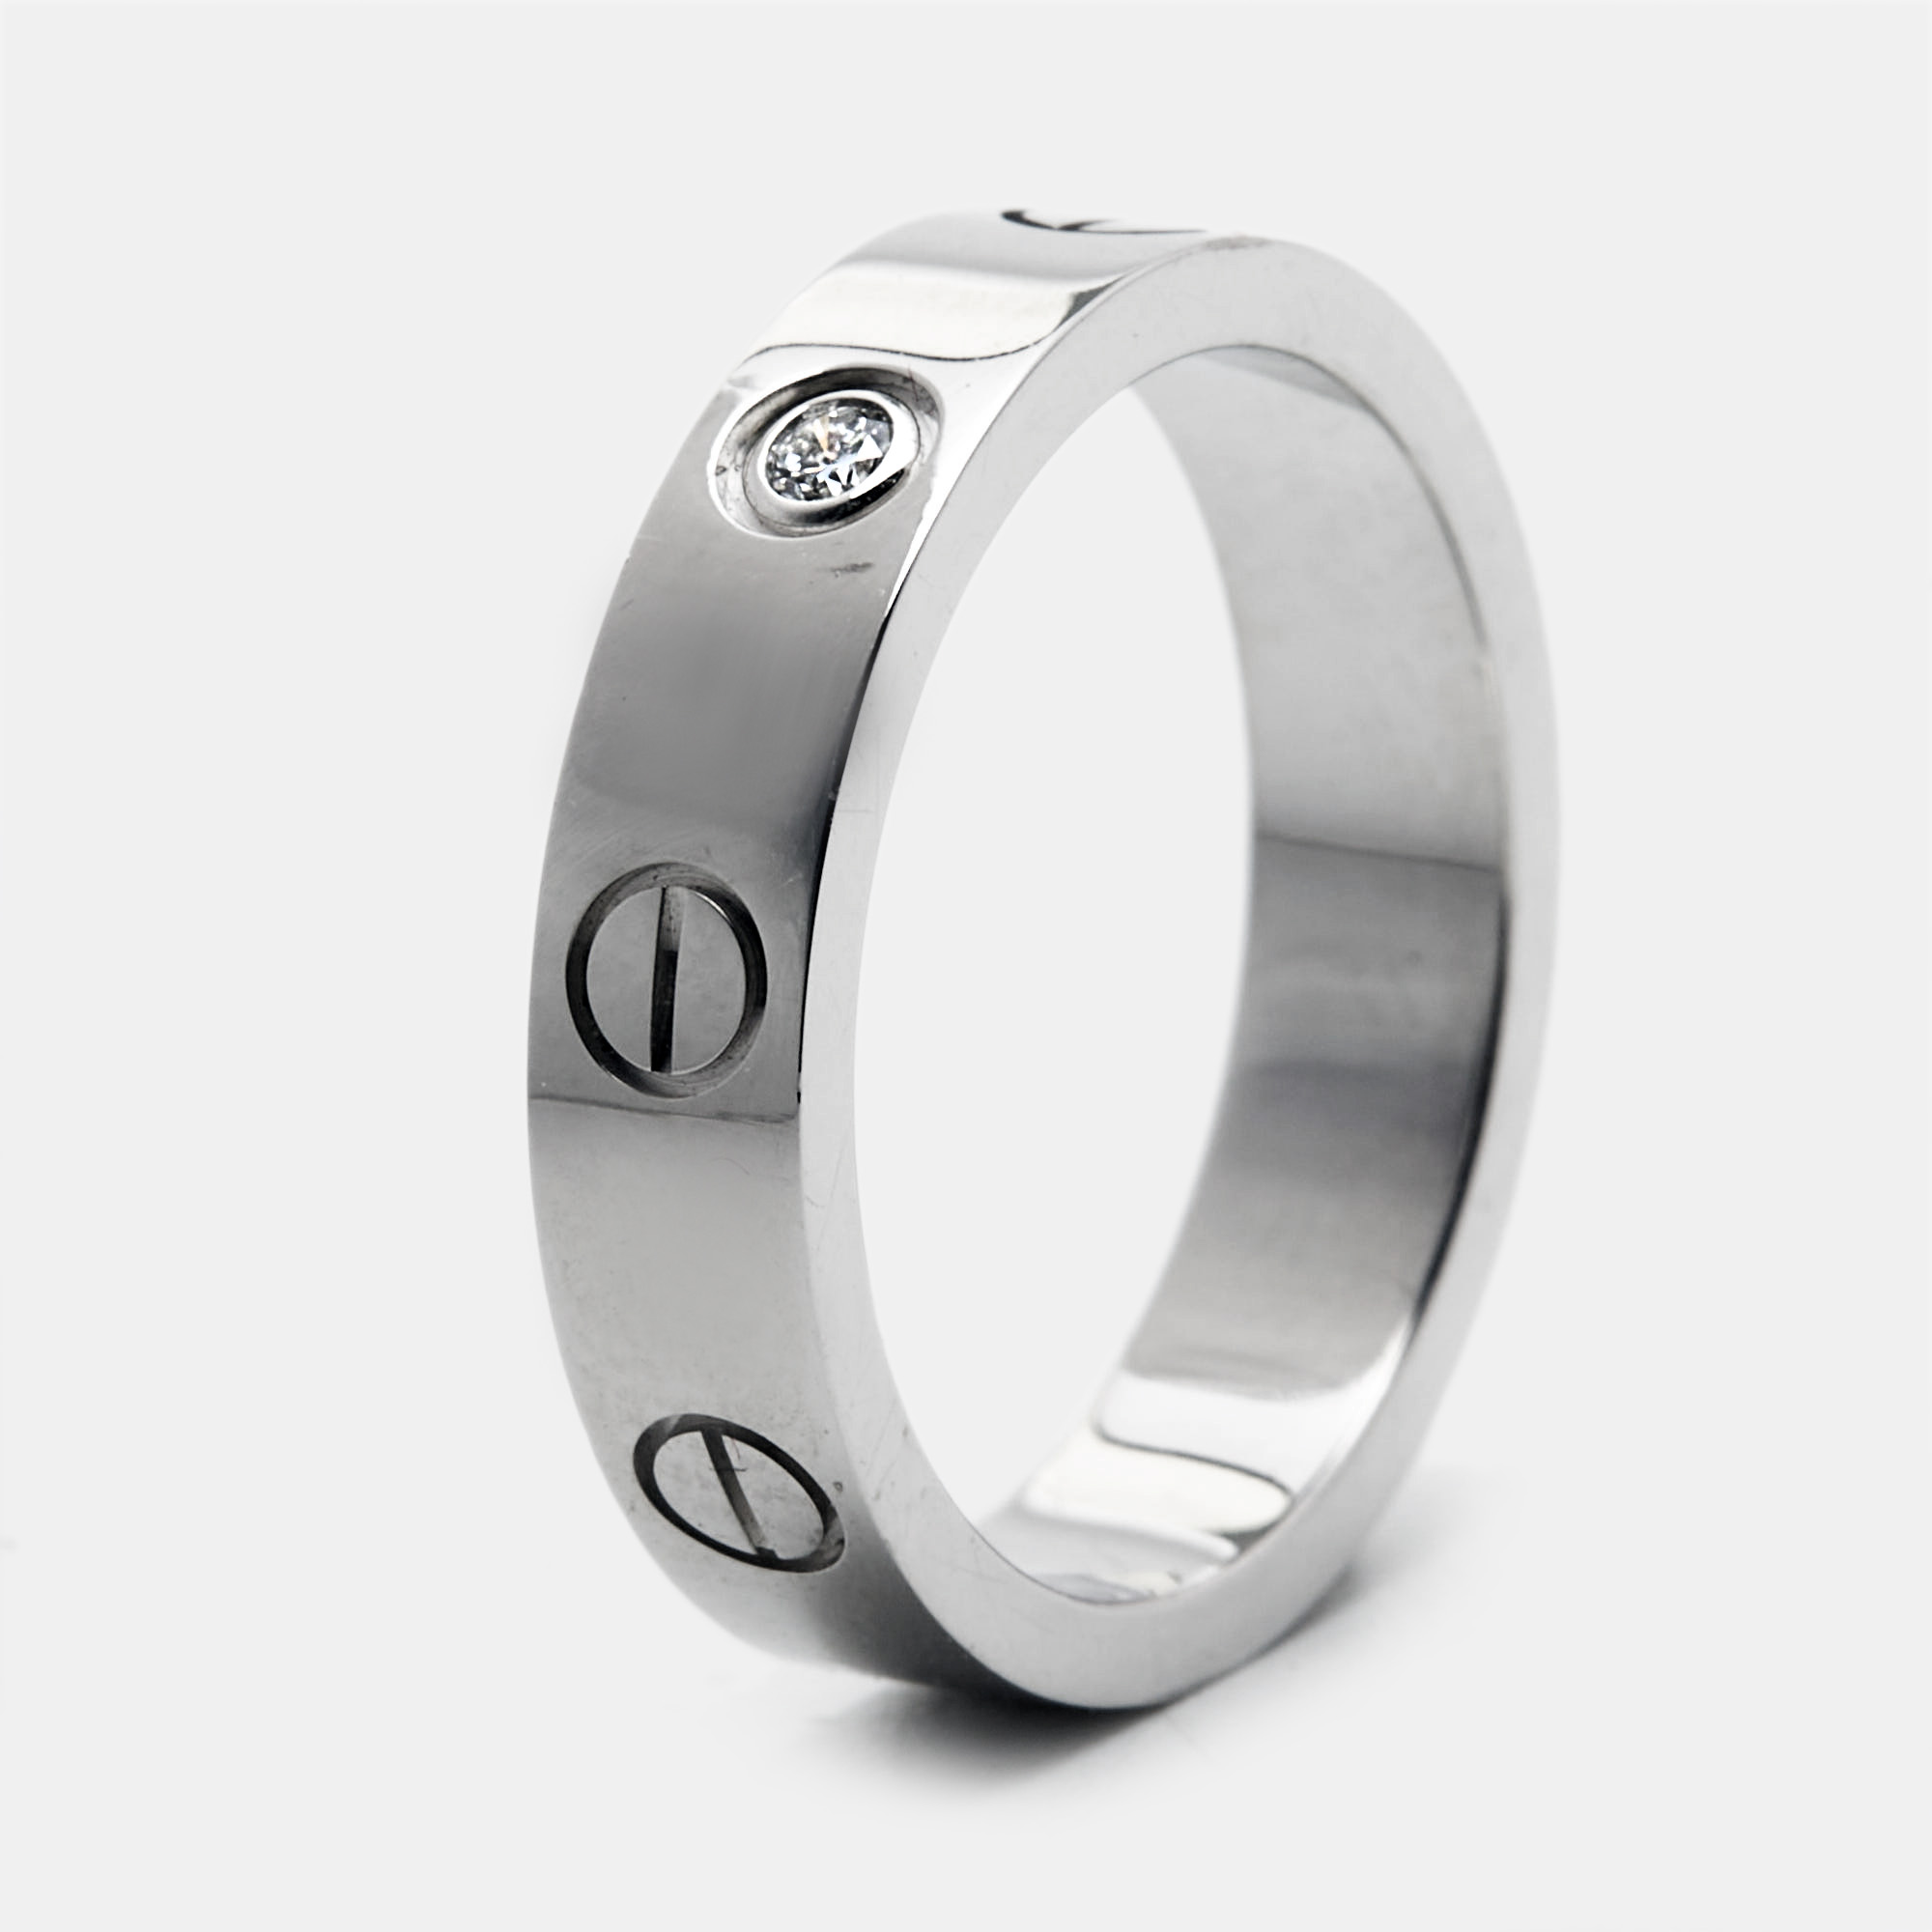 Cartier love 1 diamond 18k white gold narrow wedding band ring size 49